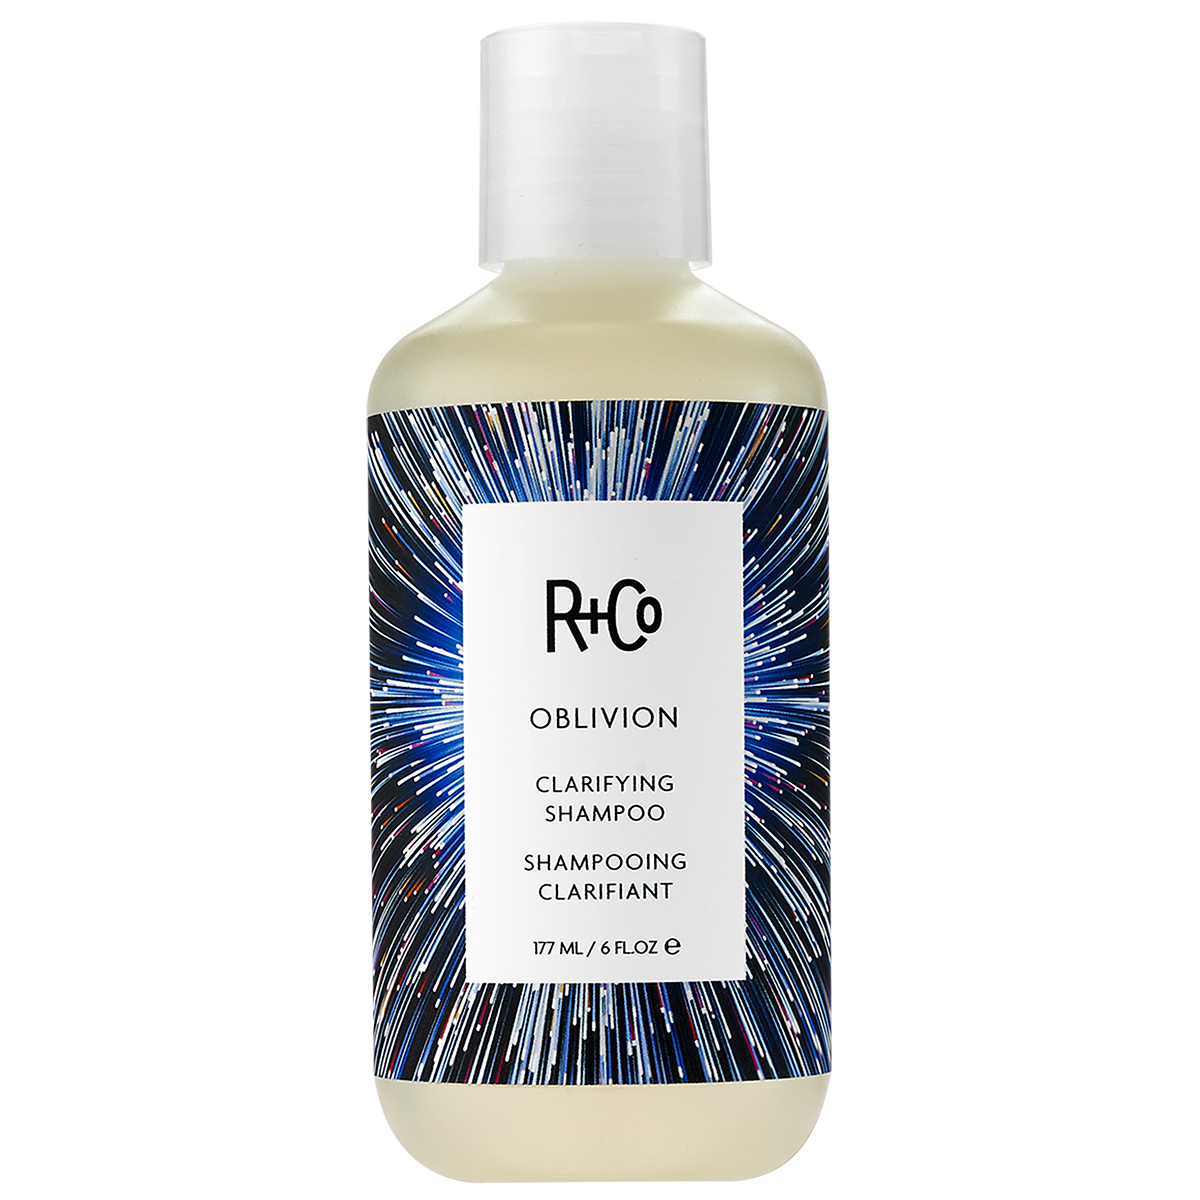 Oblivion Clarifying Shampoo, 177 ml R+CO Shampoo